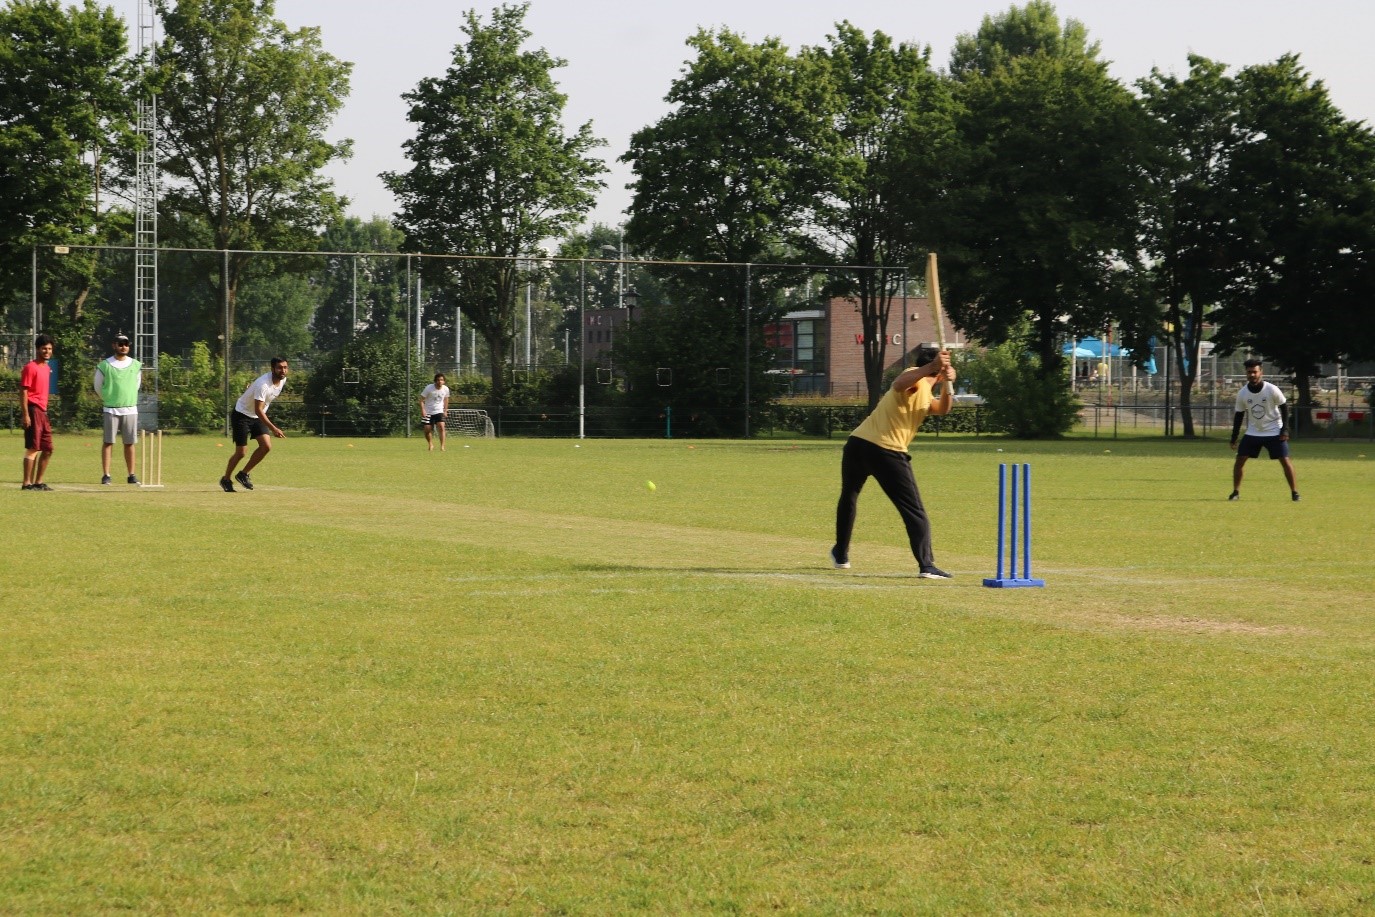 A new beginning of cricket in Wageningen